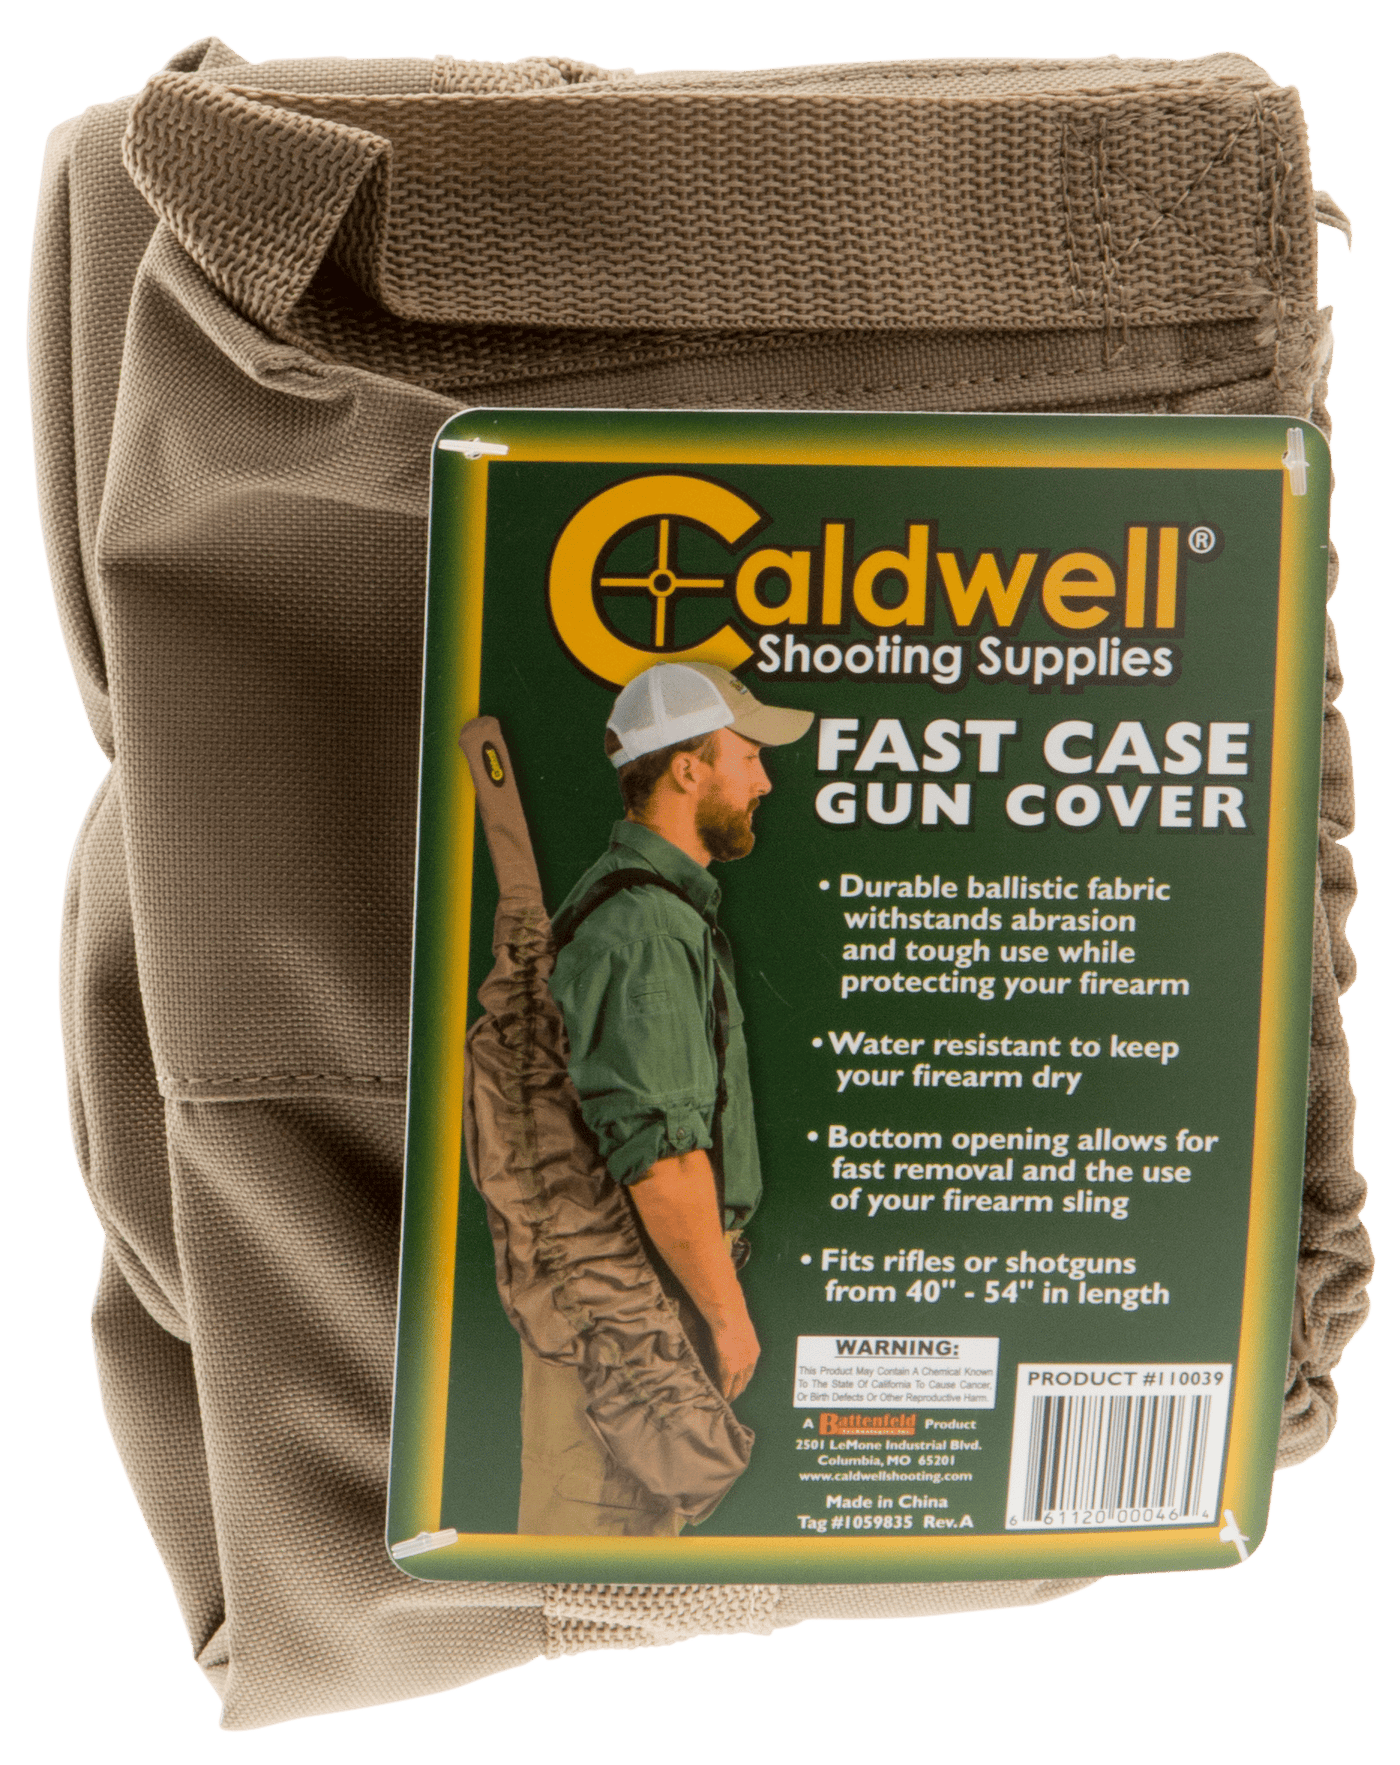 Caldwell Caldwell Fast Case, Cald 110039   Fast Case Gun Cover Firearm Accessories